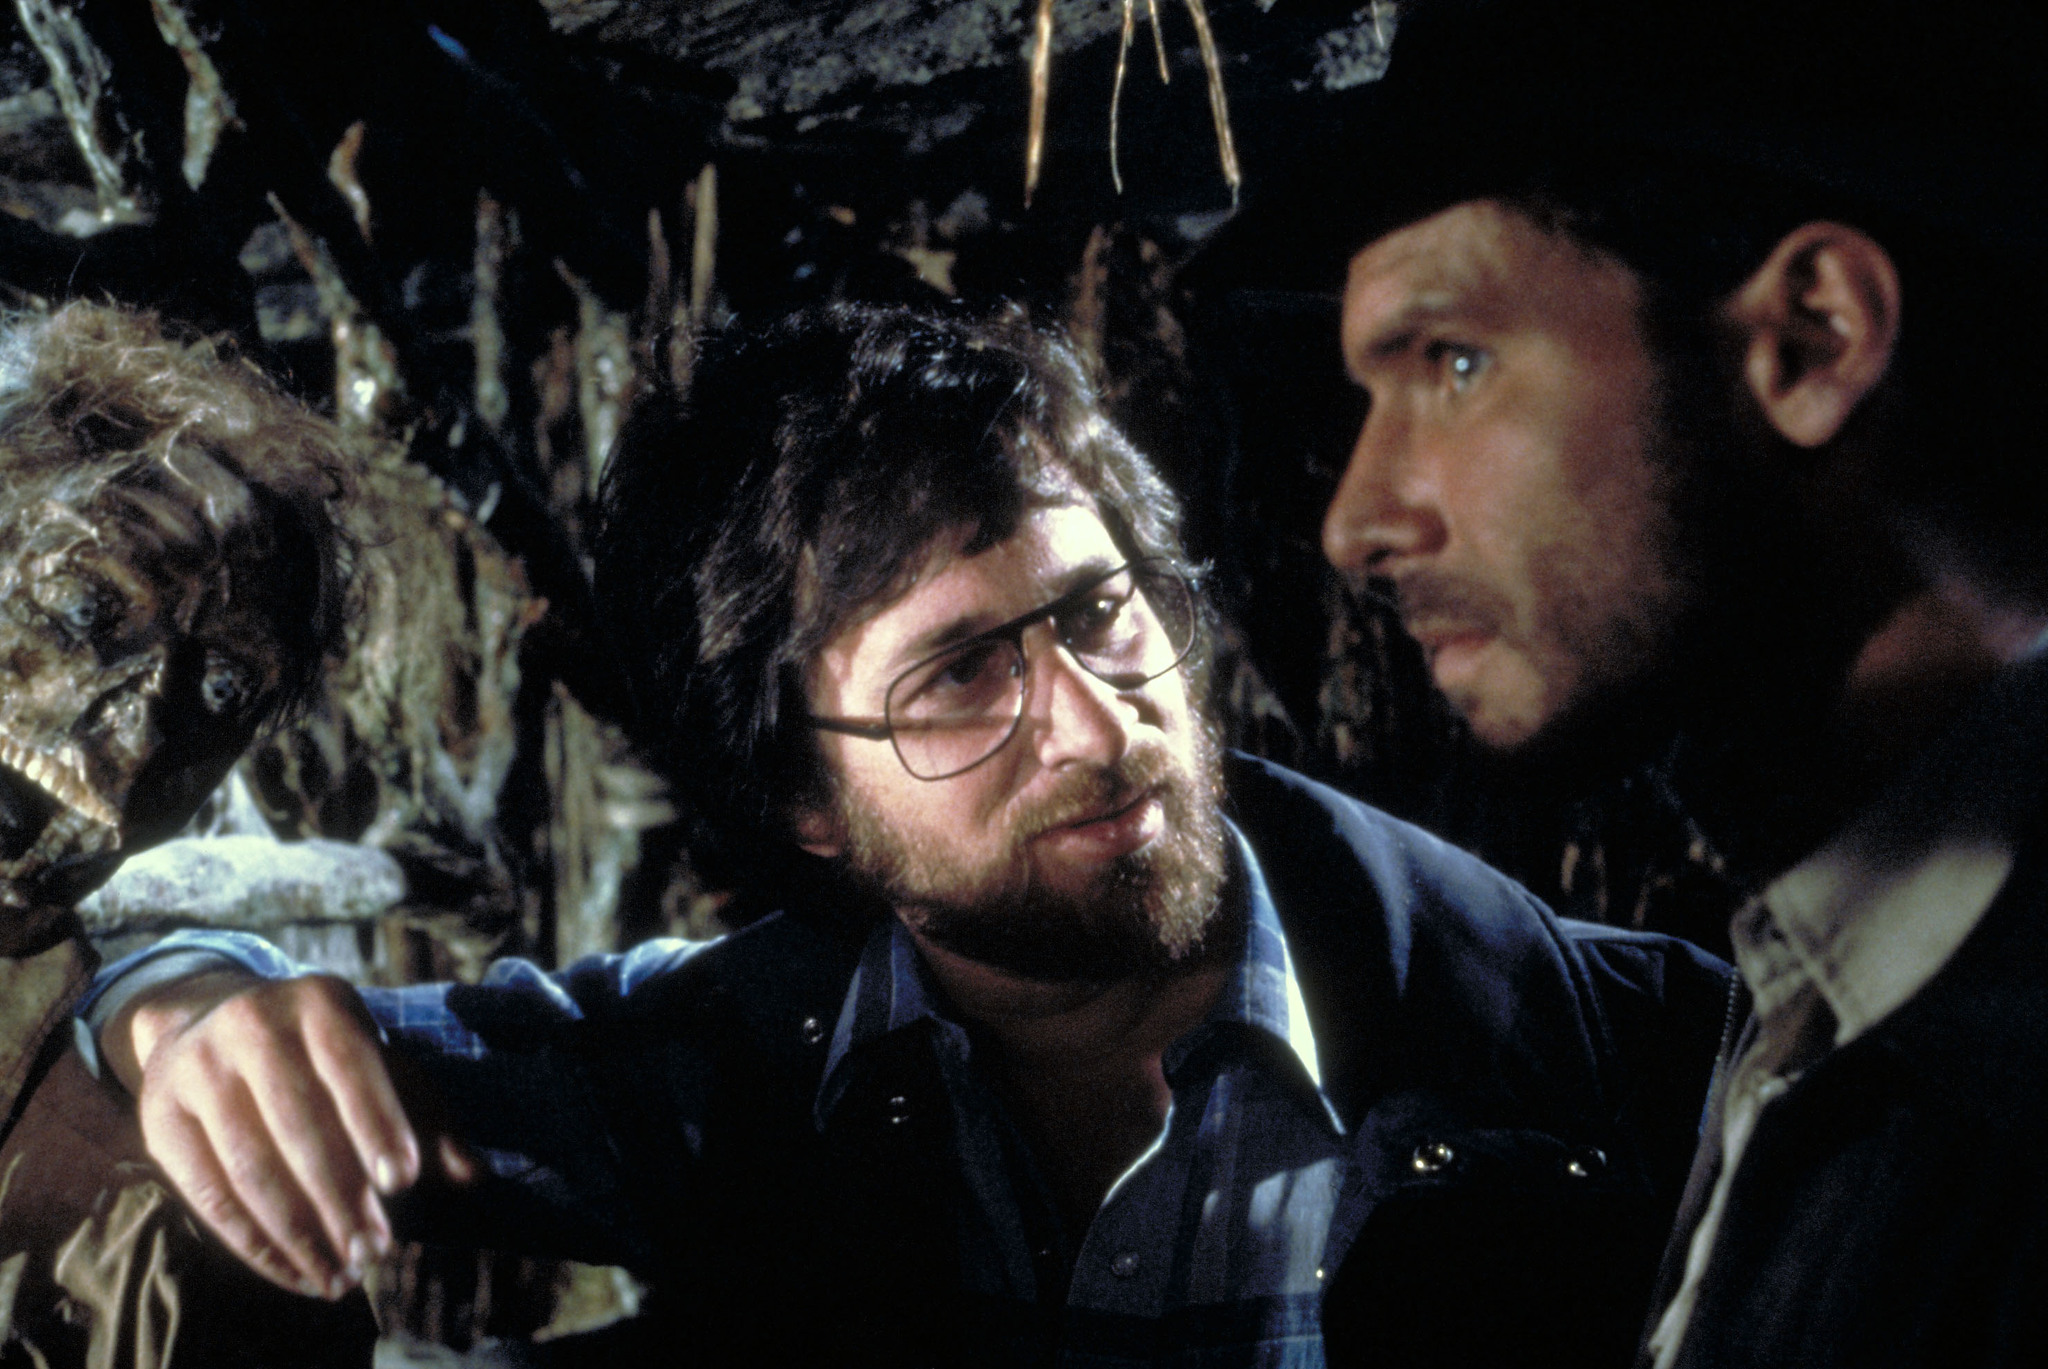 Still of Harrison Ford and Steven Spielberg in Indiana Dzounsas ir dingusios Sandoros skrynios ieskotojai (1981)